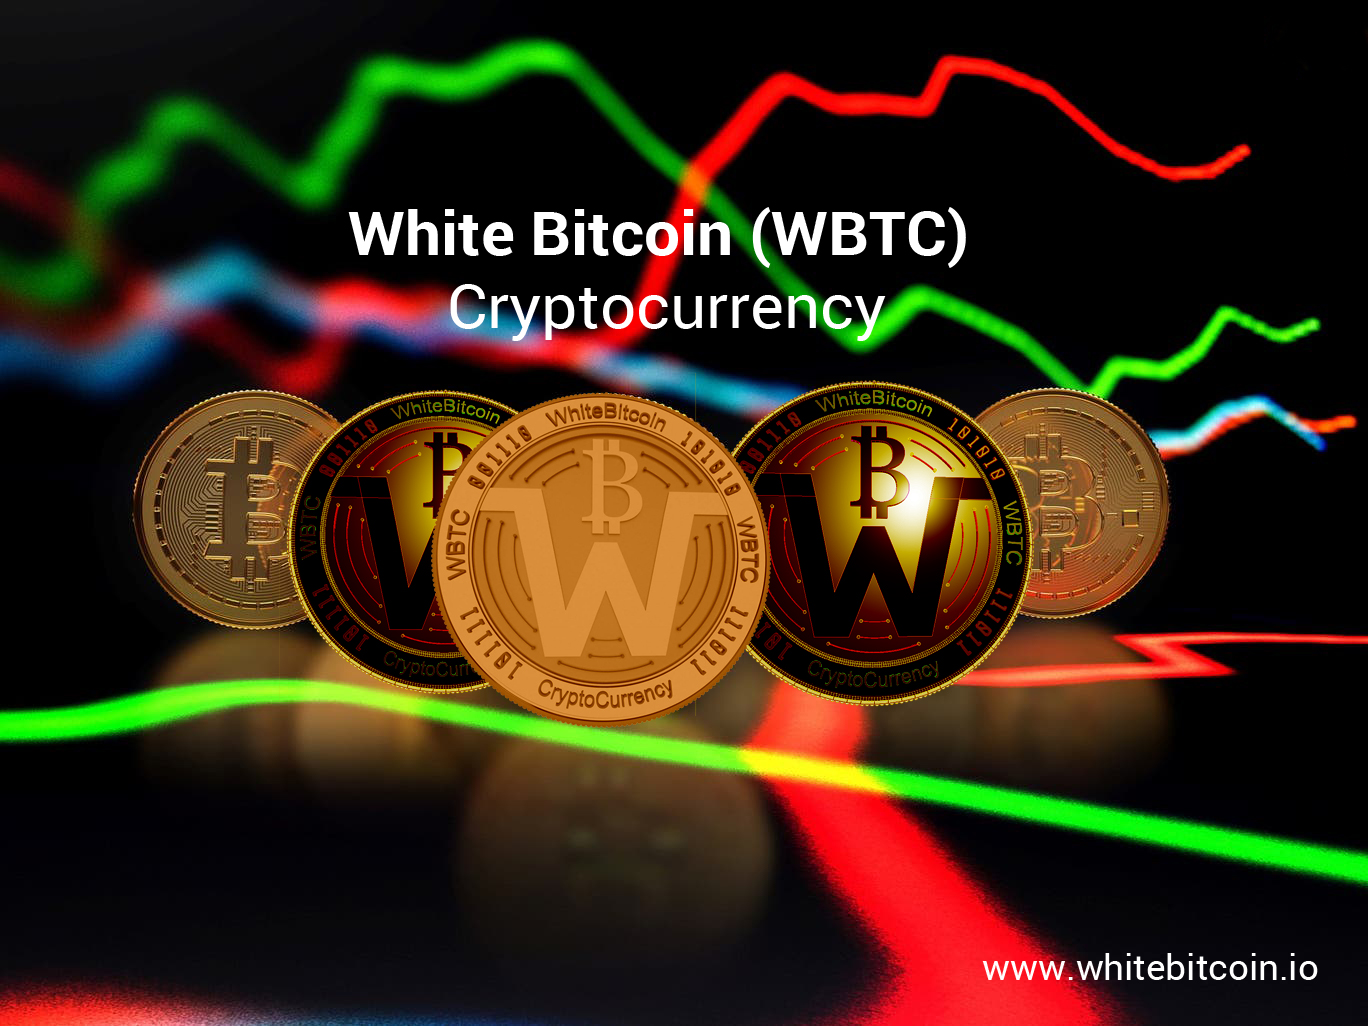 The Beginning Cost of WBTC (White Bitcoin)